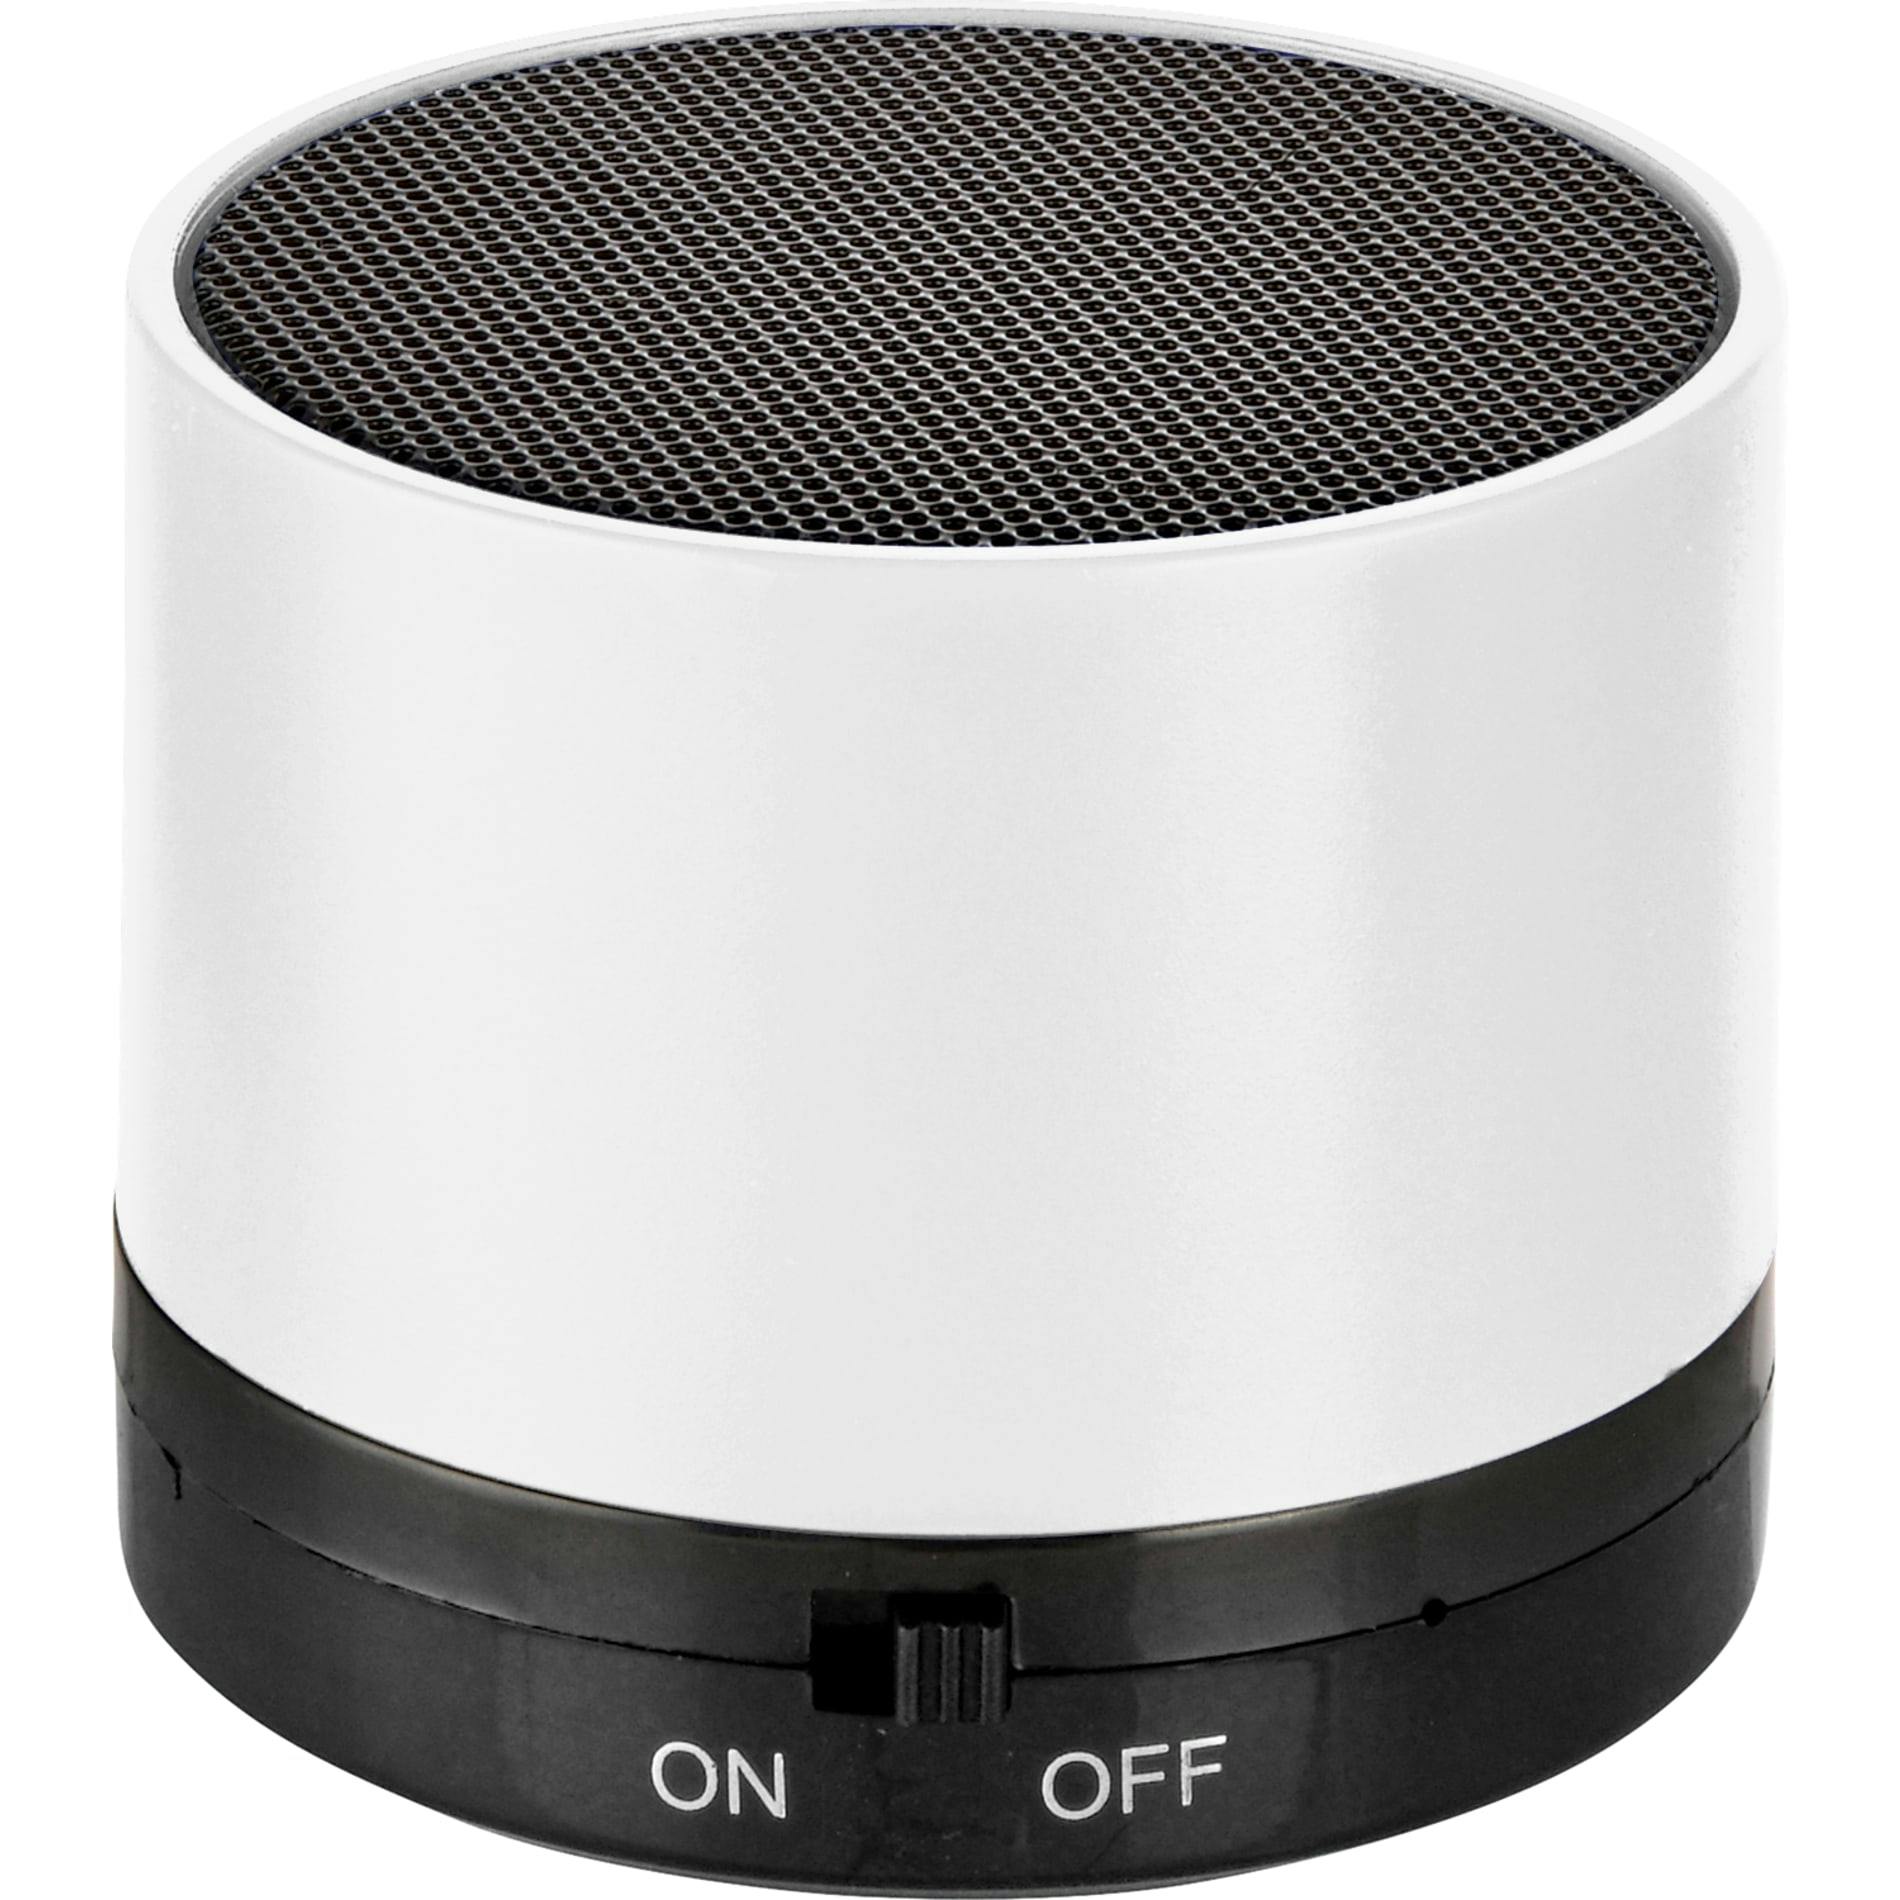 Cylinder Bluetooth Speaker - additional Image 1